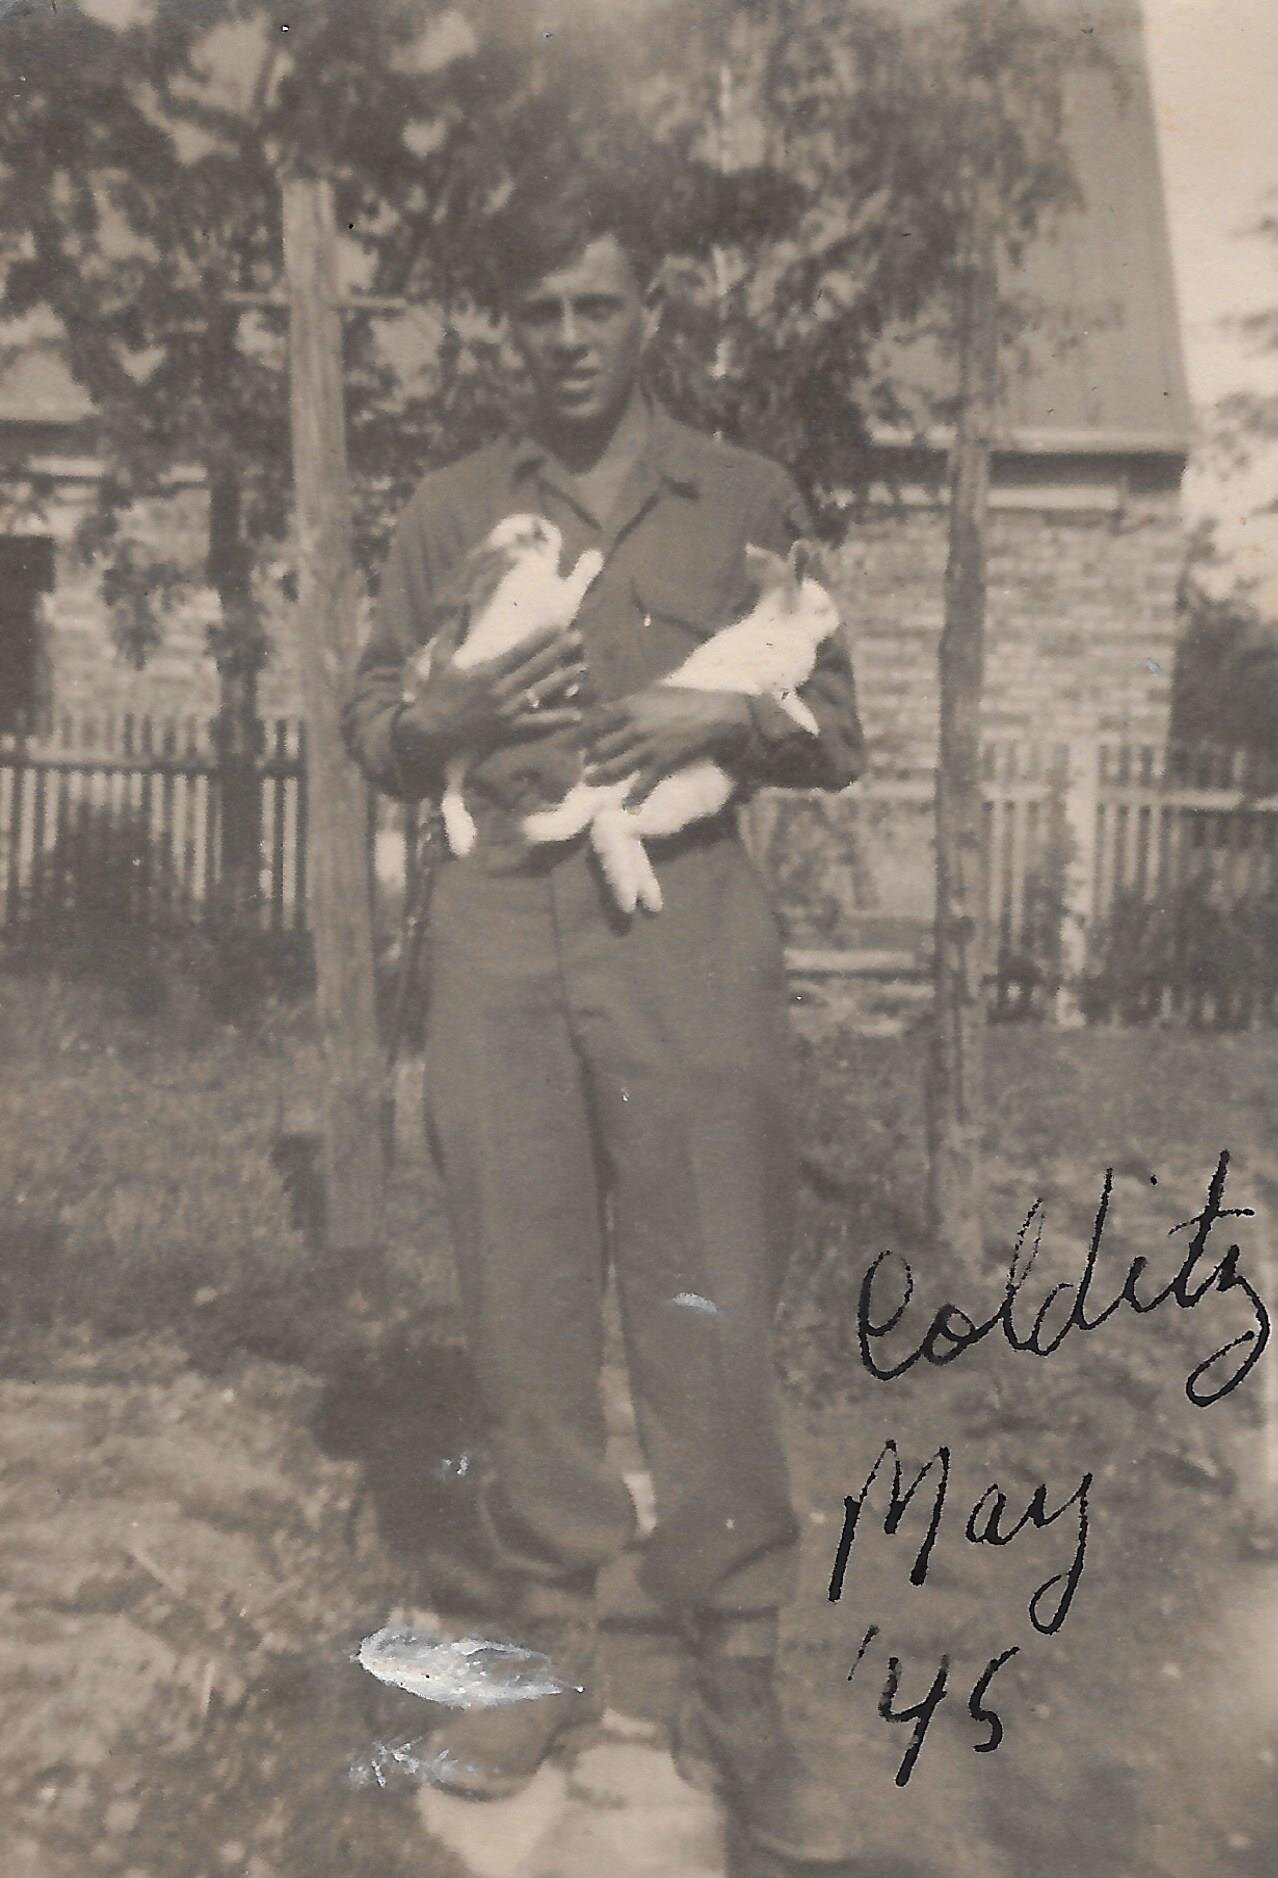 Dad Colditz Germanywith Bunny Rabbits May 1945.jpg